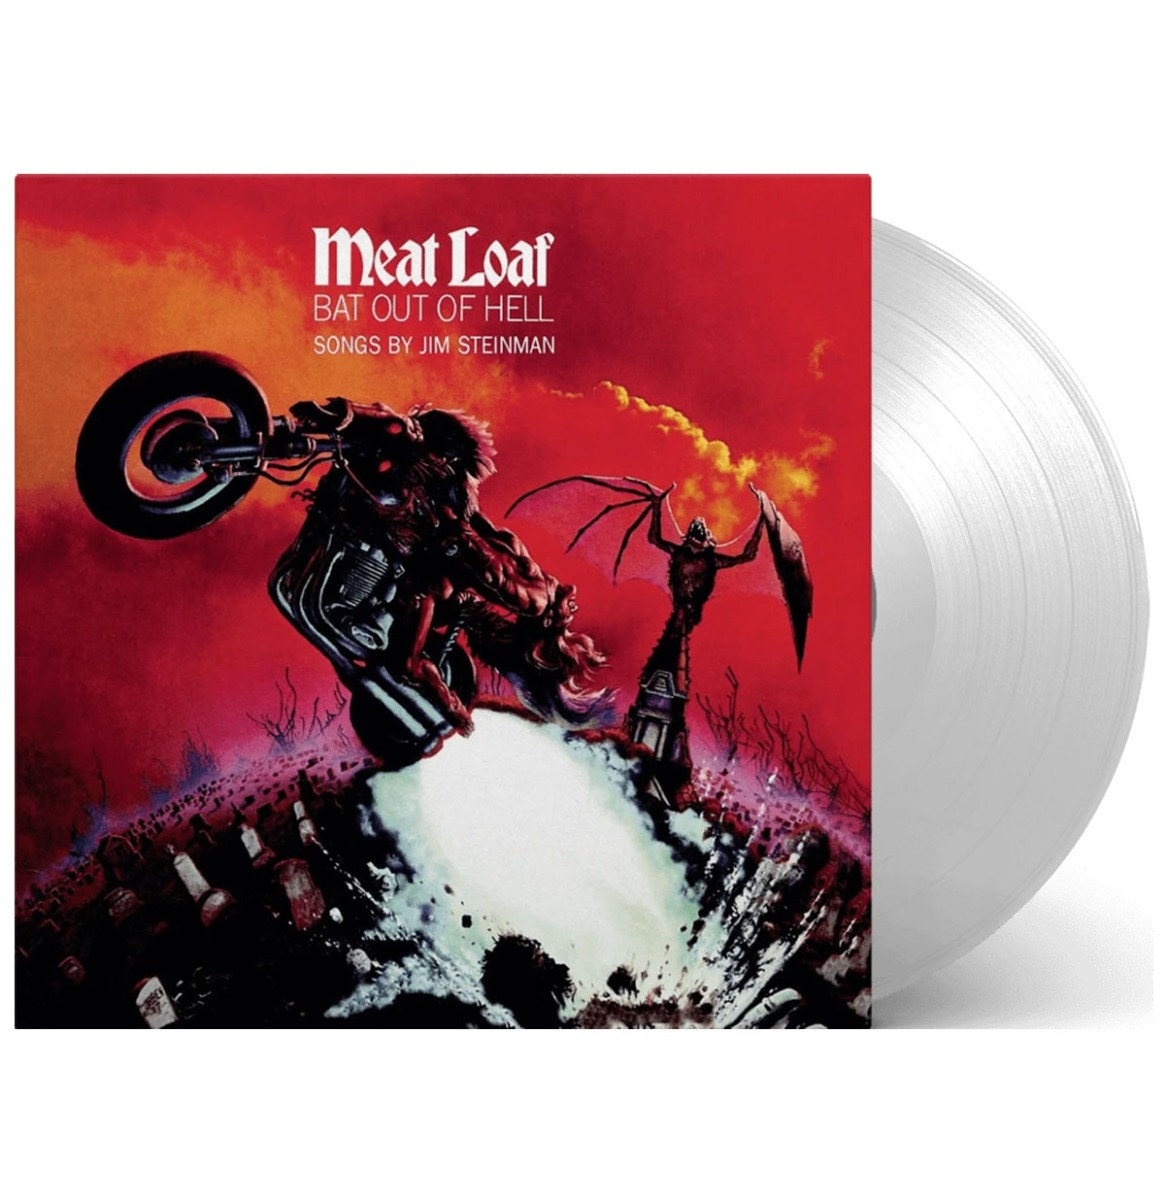 Meat Loaf - Bat Out Of Hell LP (Limited Transparent Vinyl)